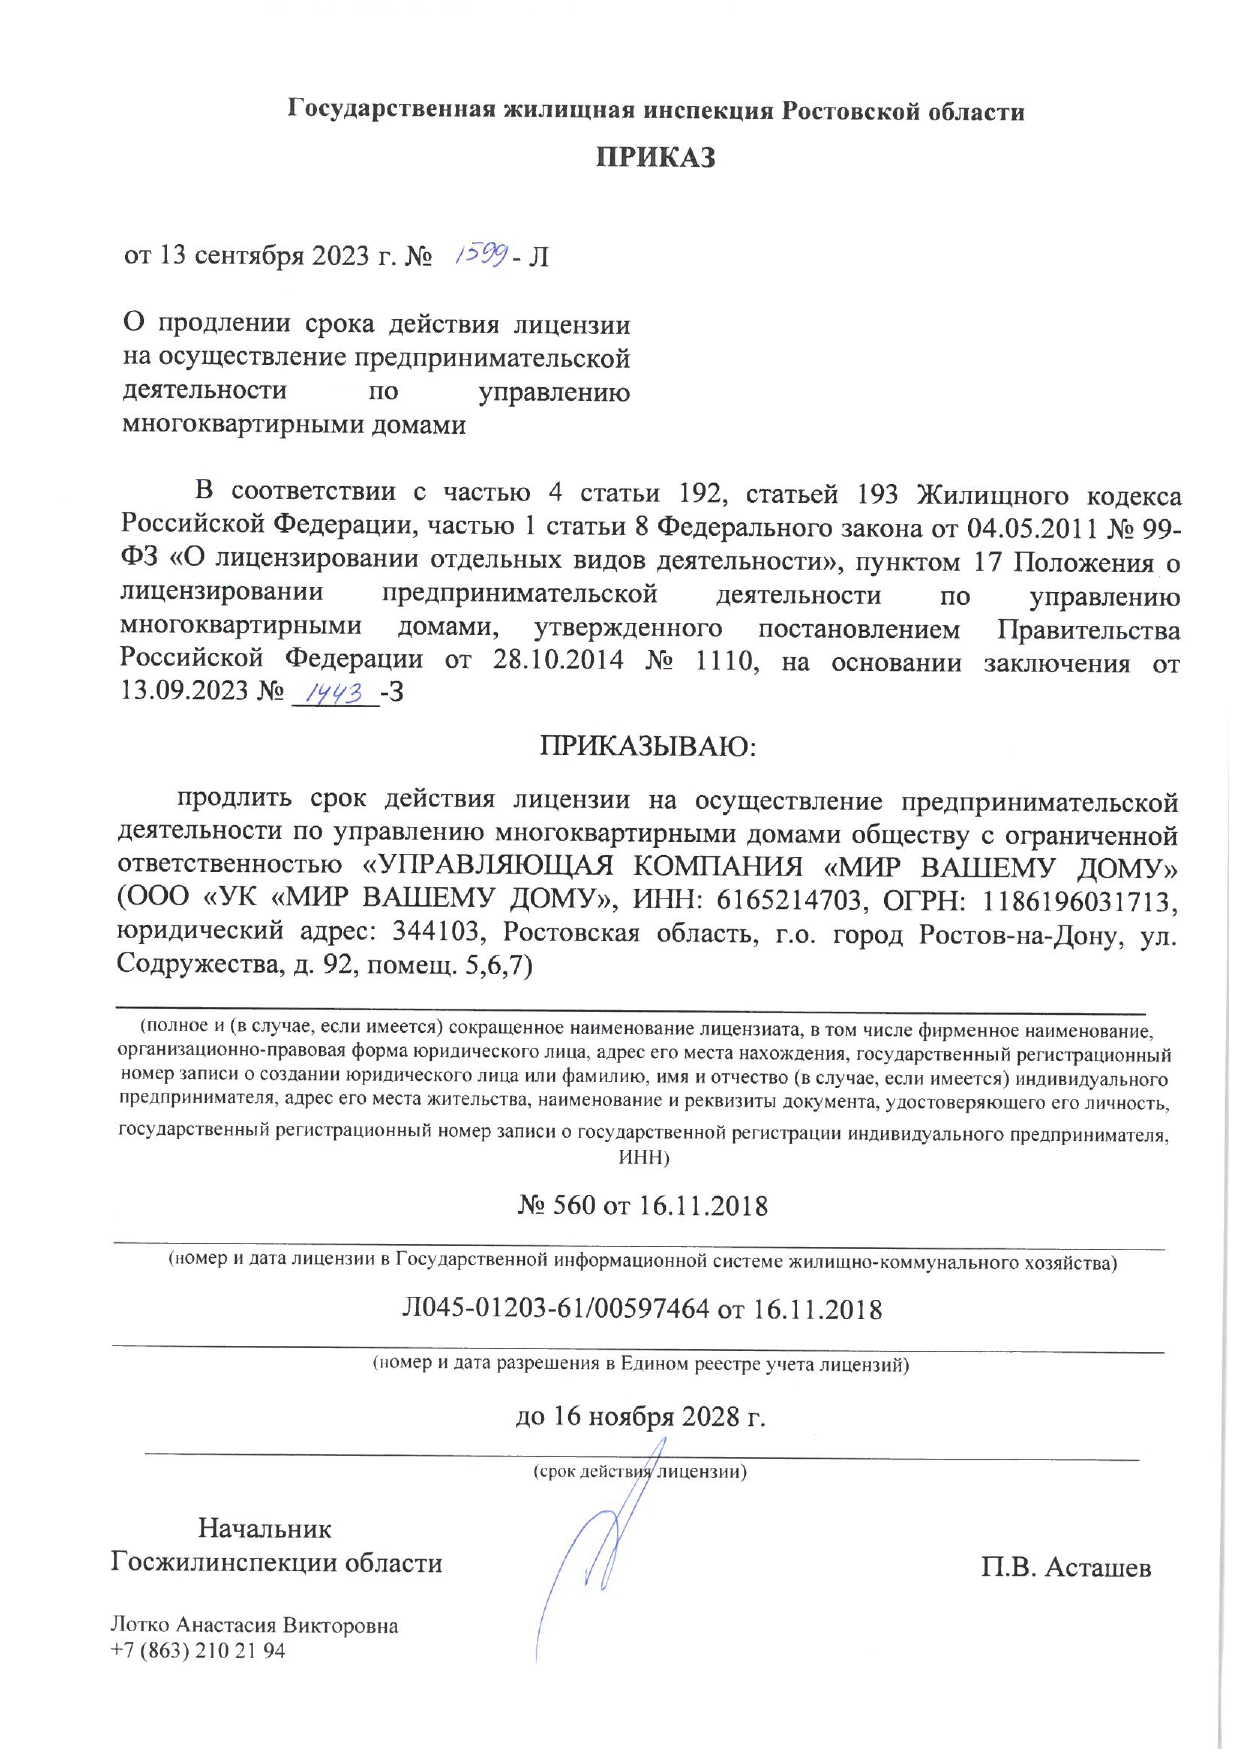 Лицензия на управление МКД №560 от 16.11.2018